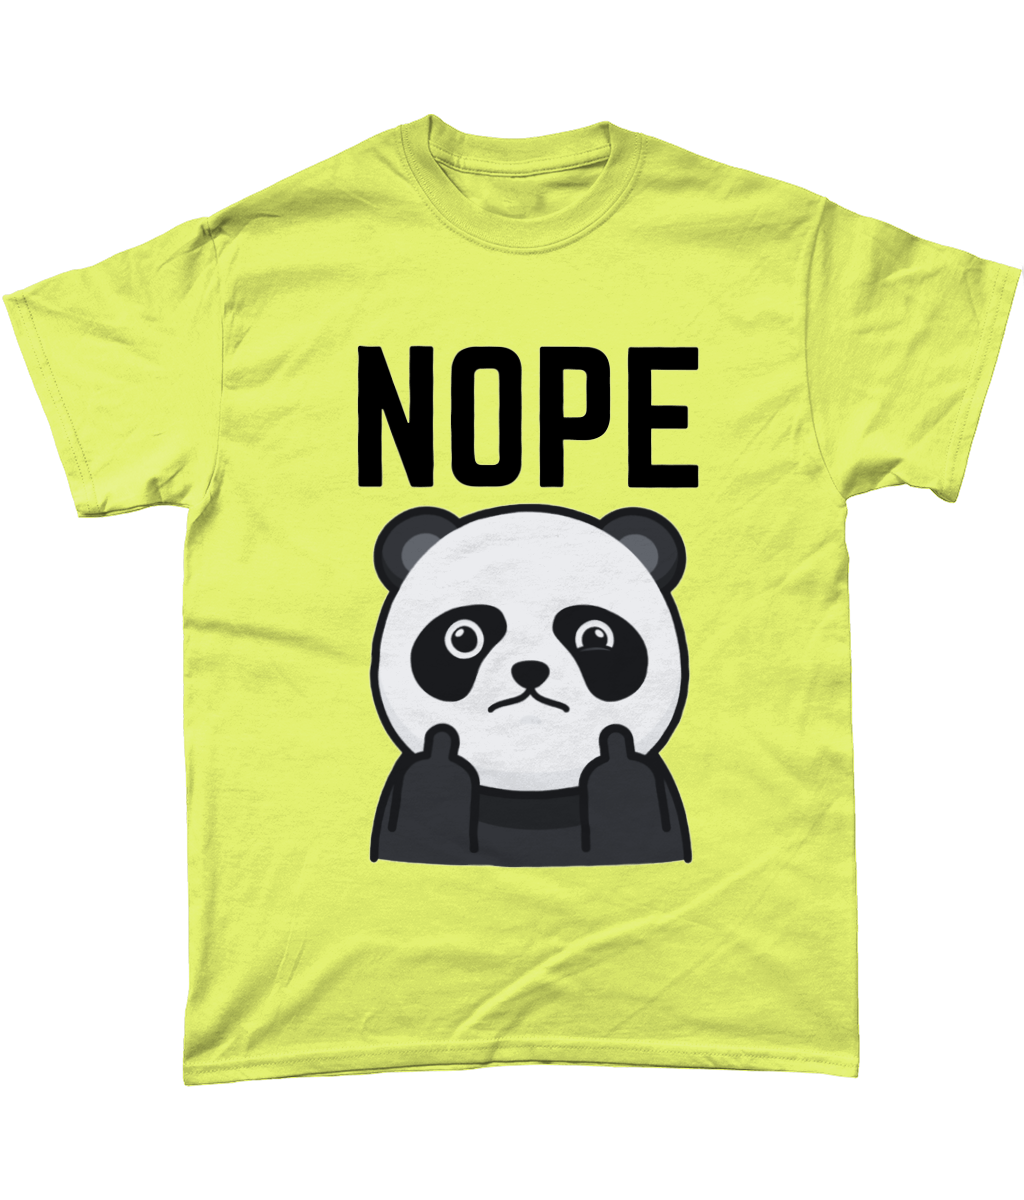 Nope swearing middle fingers panda t-shirt